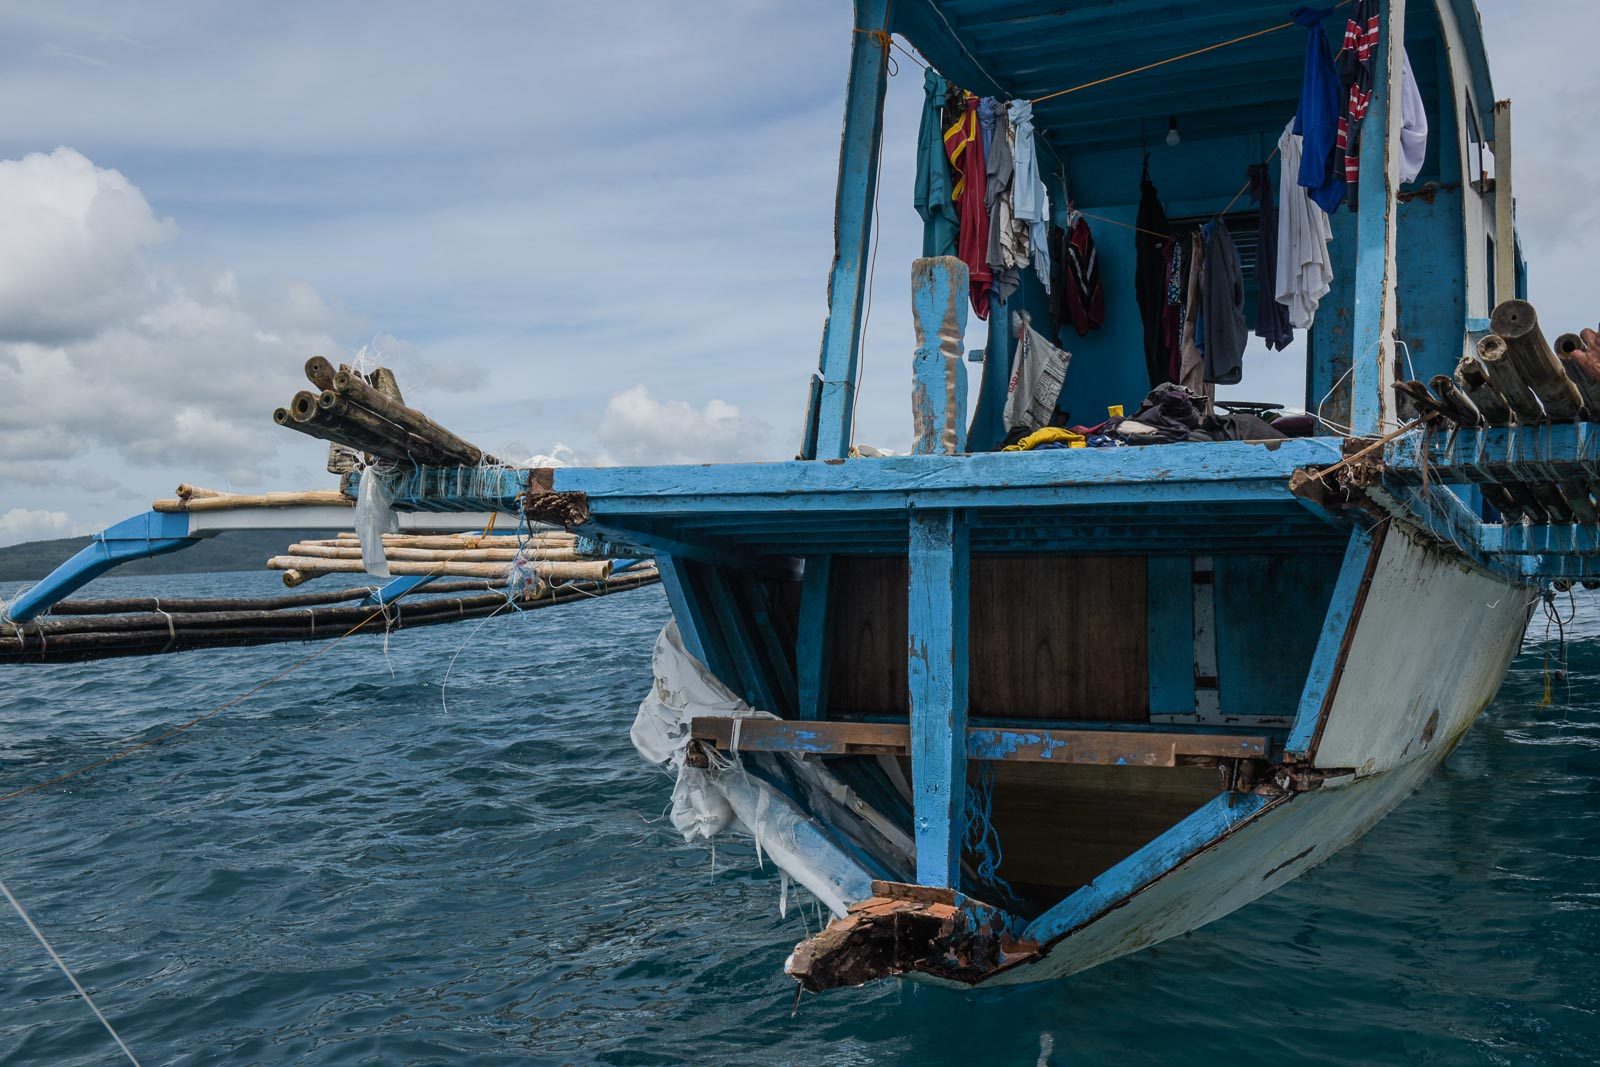 ‘Daplis lang’: Duterte exec downplays China ship ramming PH boat